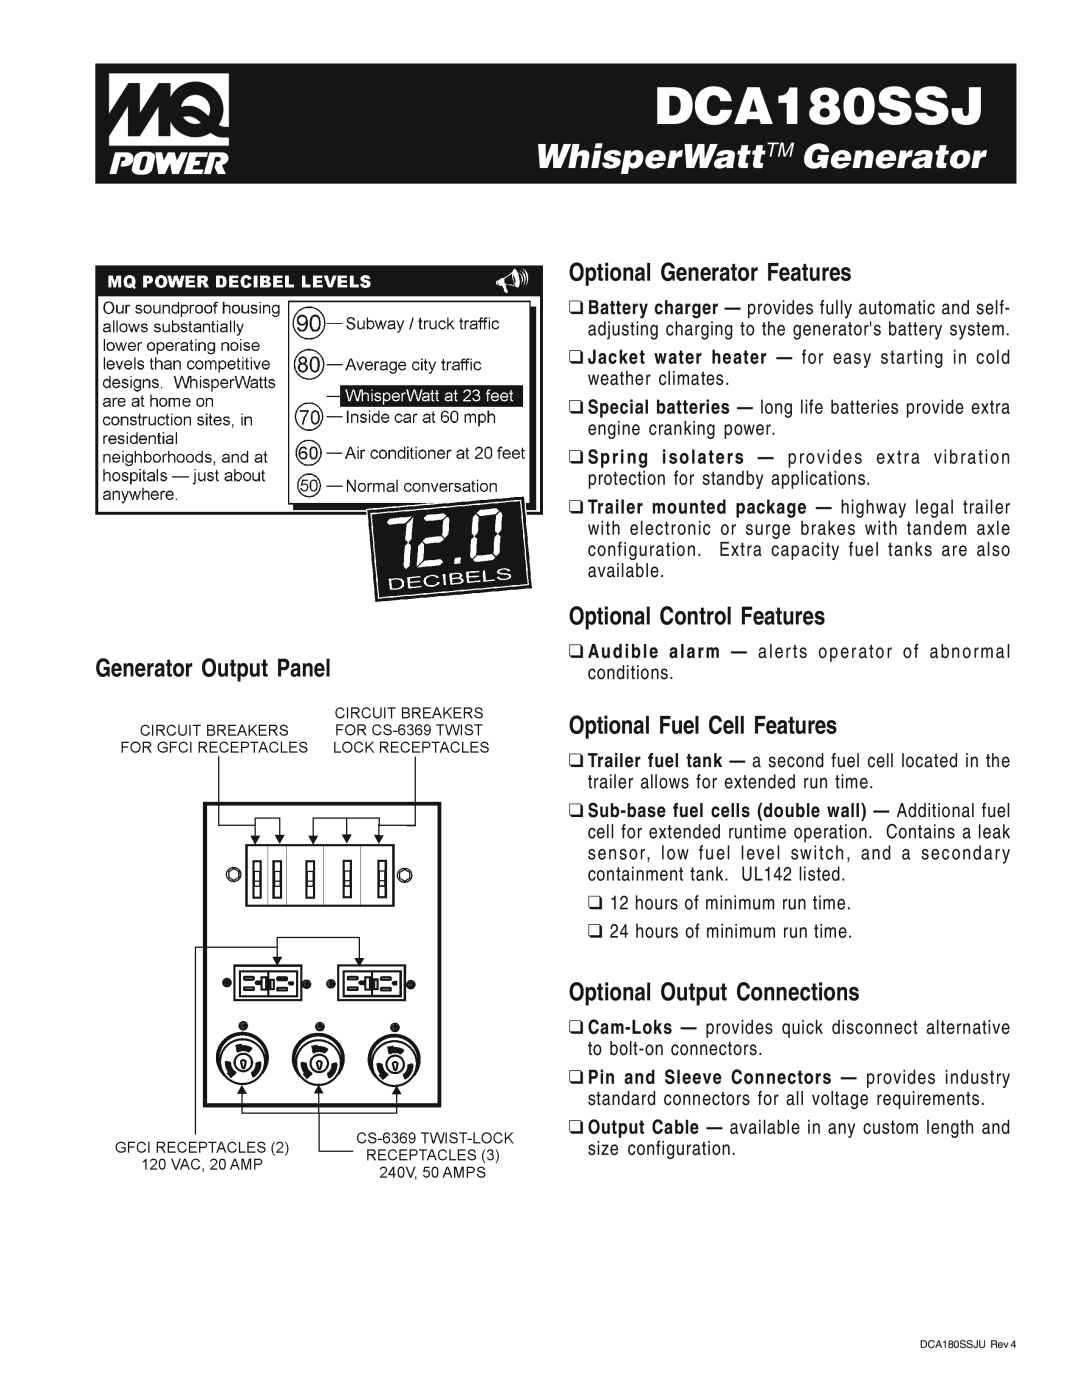 Multiquip DCA180SSJ manual Optional Generator Features, Optional Control Features, Generator Output Panel 